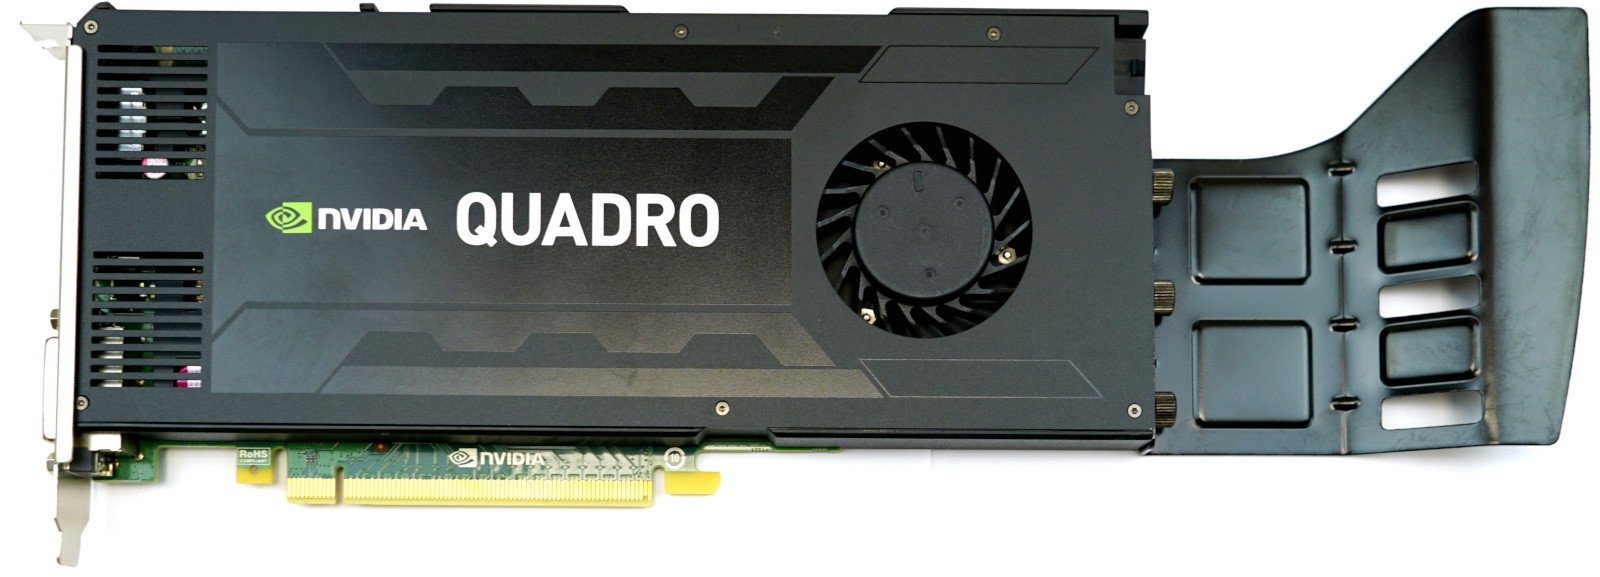 Nvidia Quadro K4200 4GB GDDR5 PCIe x16 